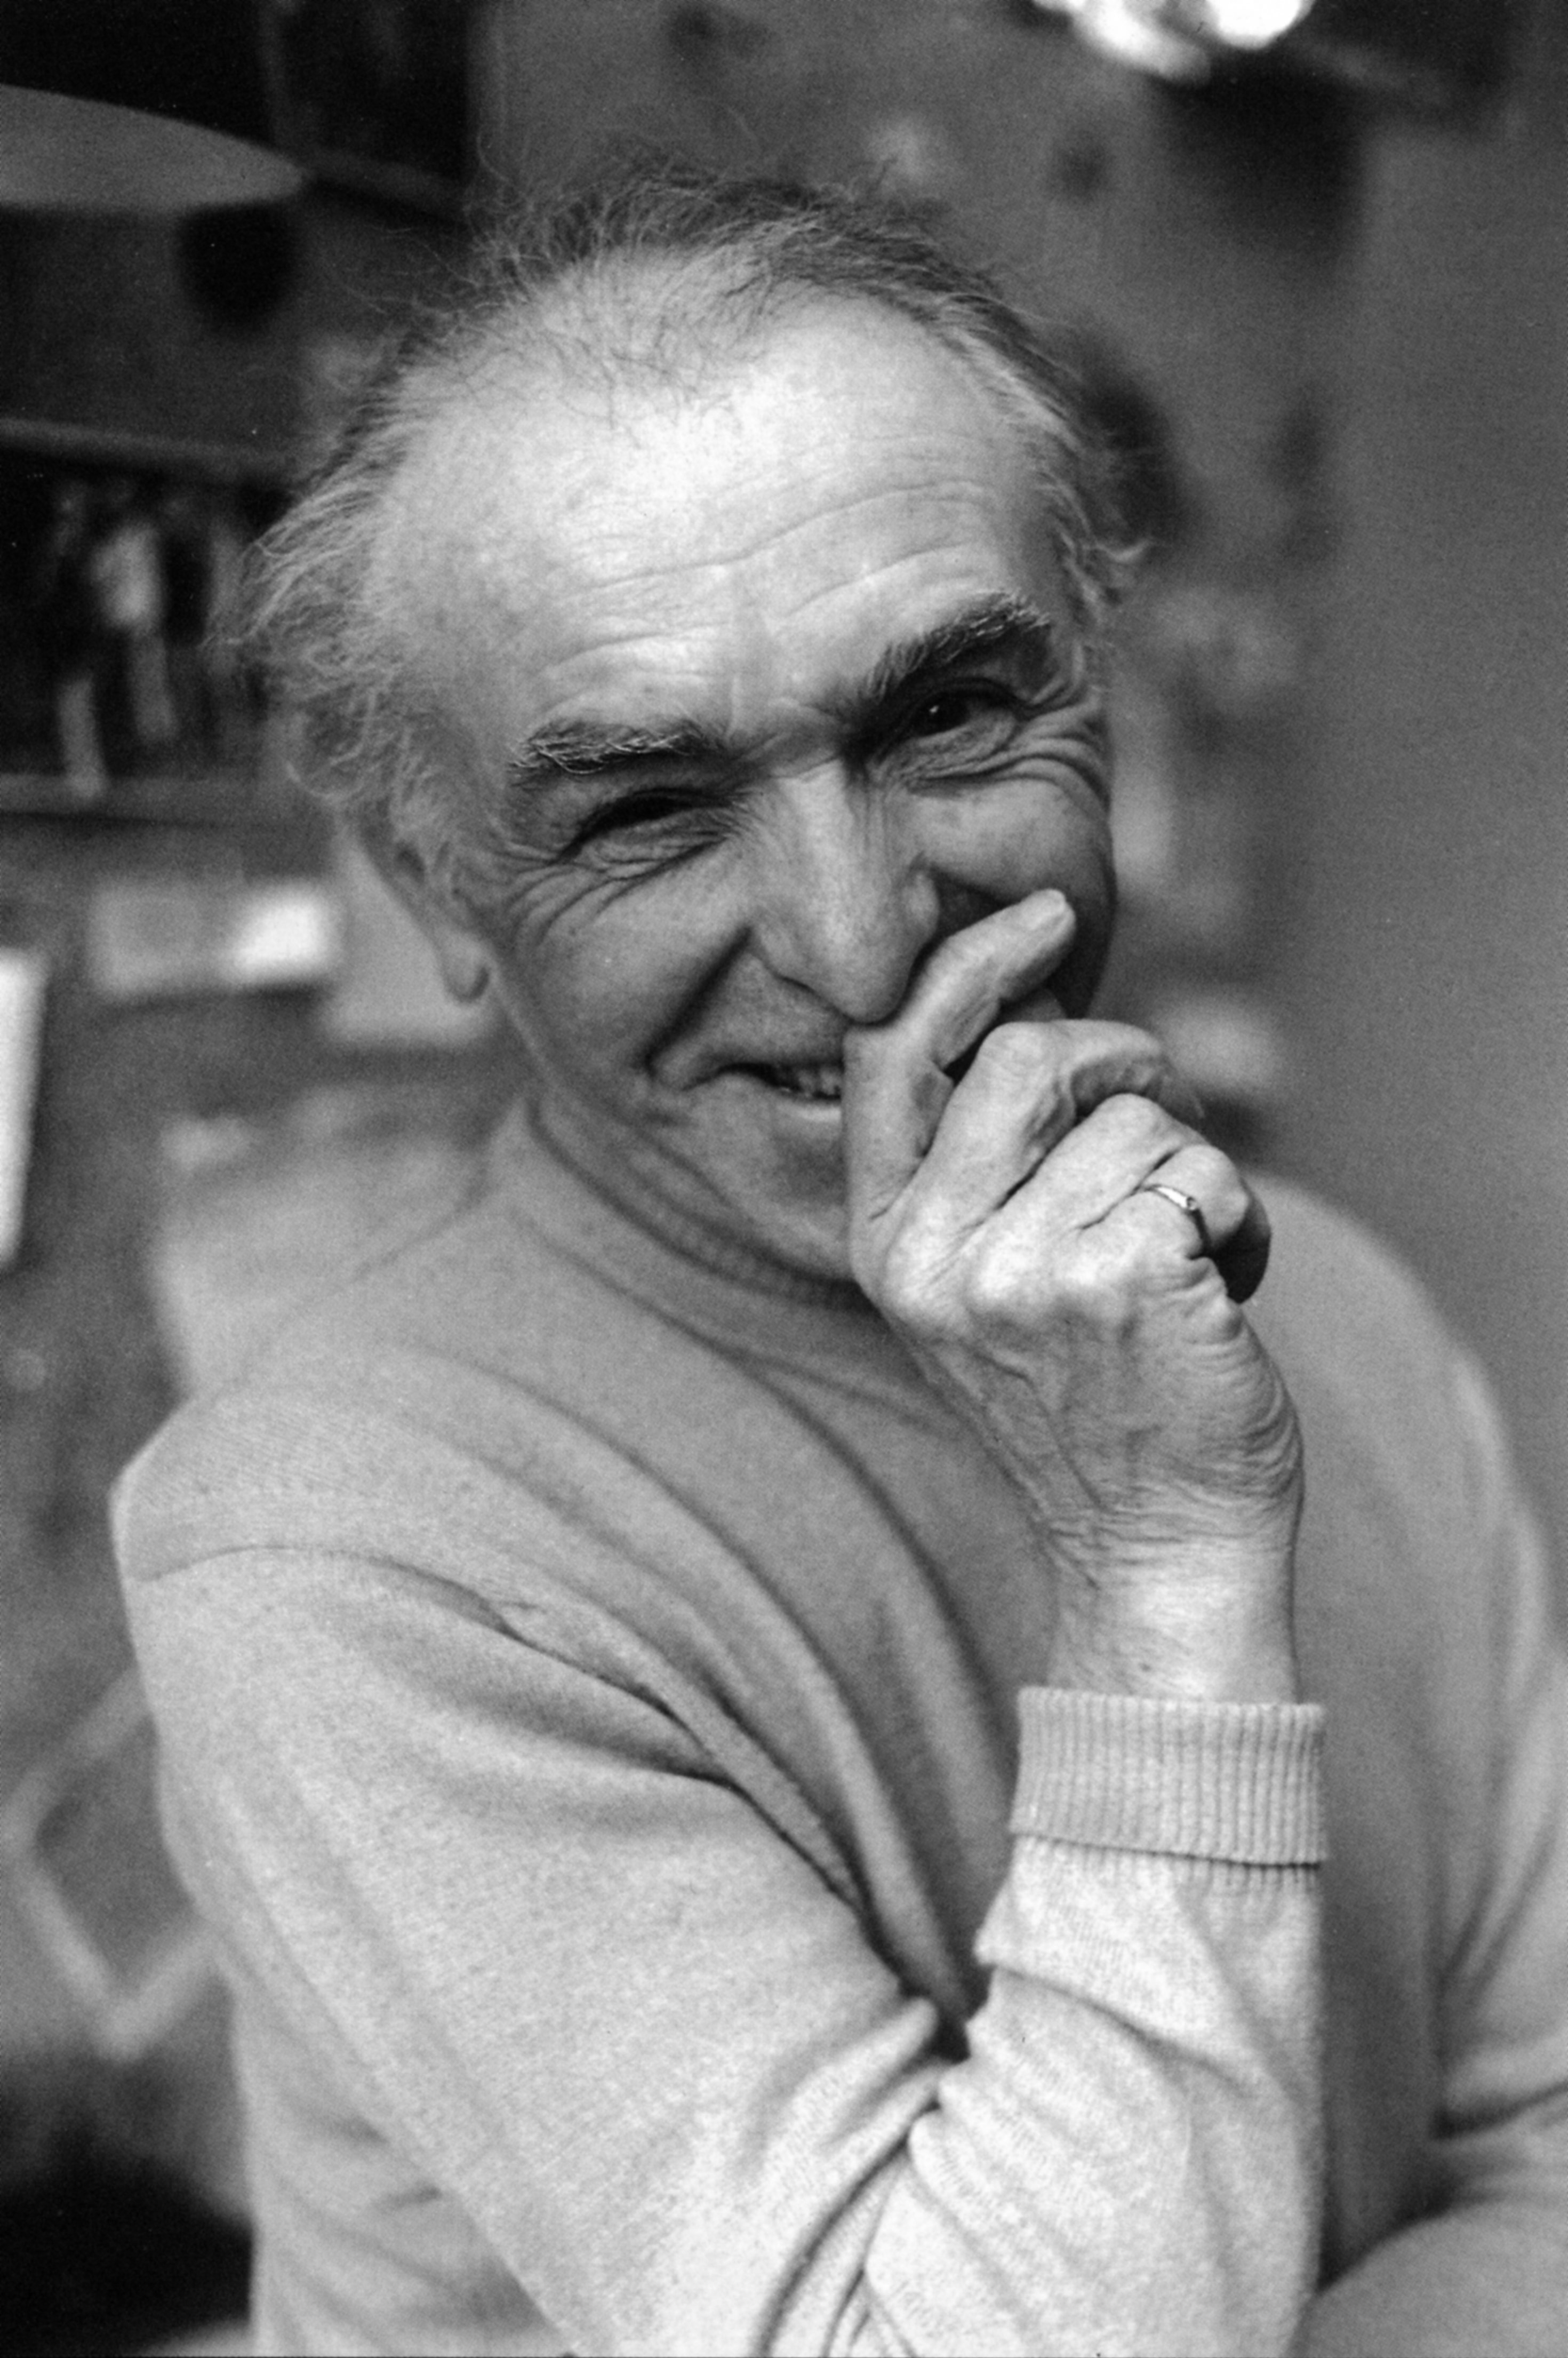 Robert Doisneau, chez lui, 1987